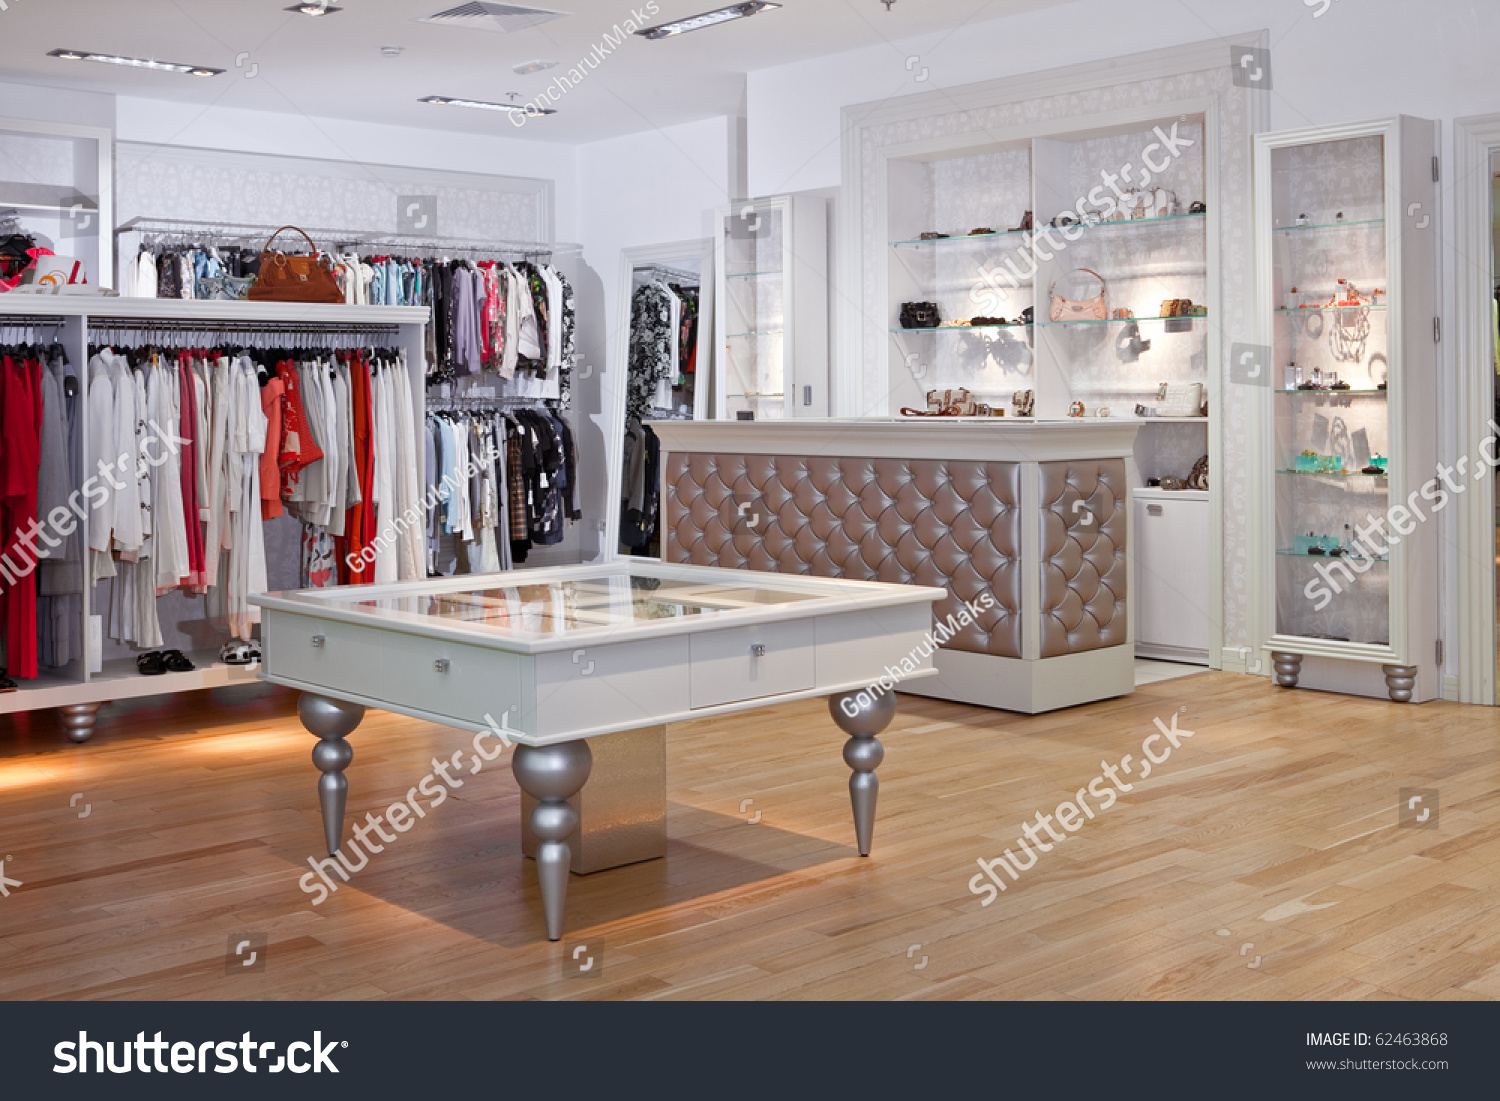 Clothing Store Interior Stock Photo 62463868 - Shutterstock